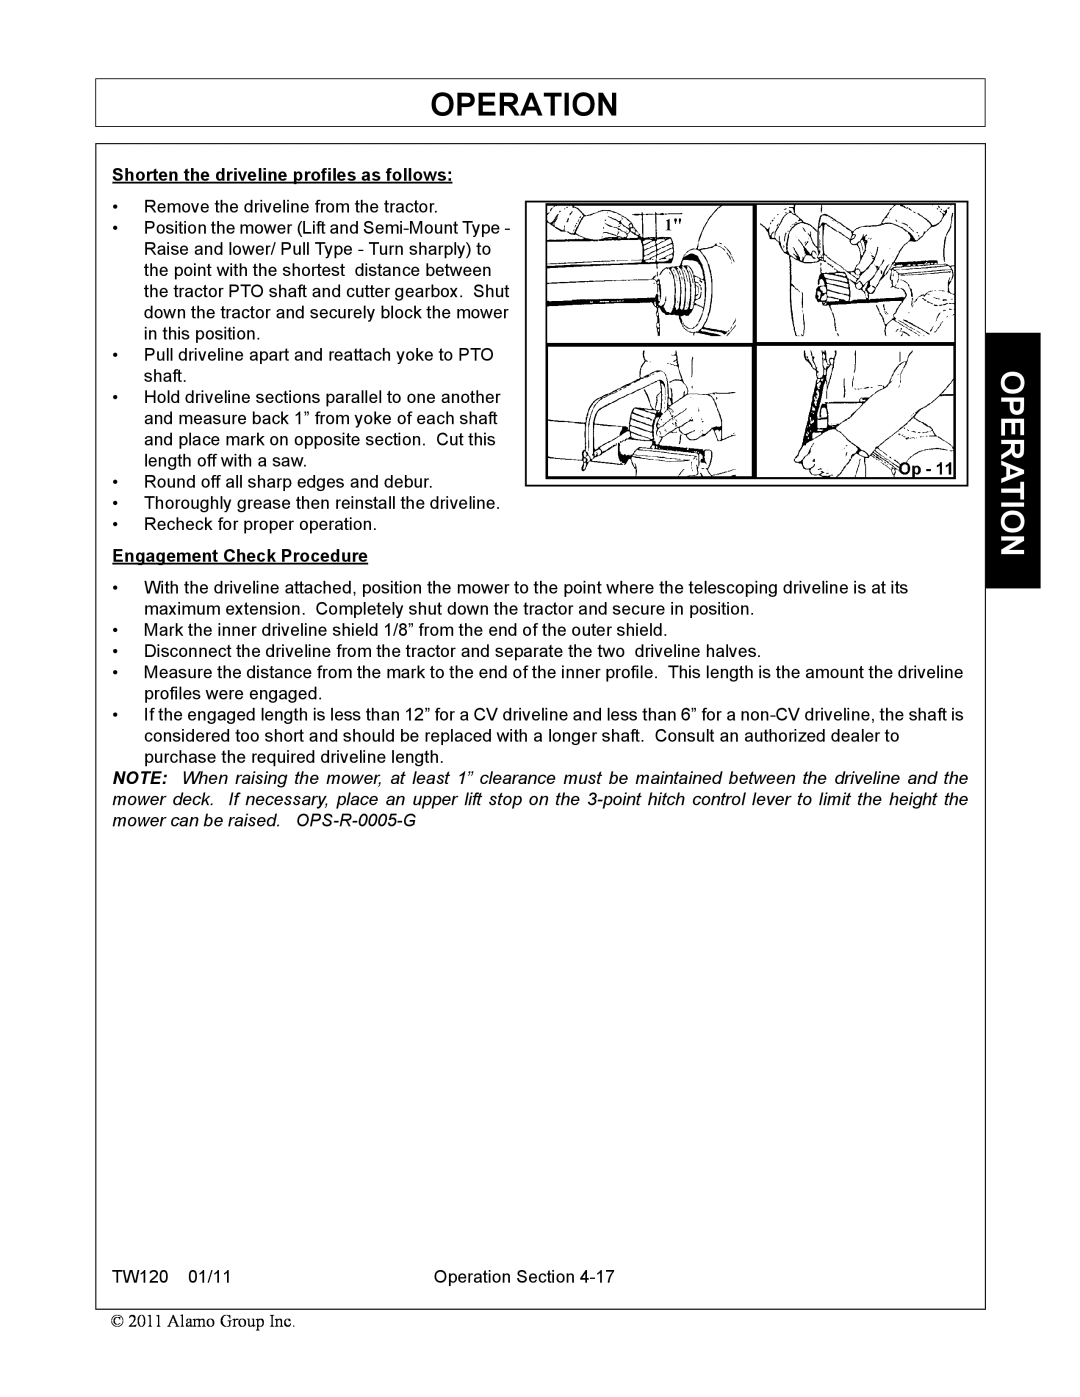 Blue Rhino FC-0025, FC-0024 manual Operation, Shorten the driveline profiles as follows, Engagement Check Procedure 